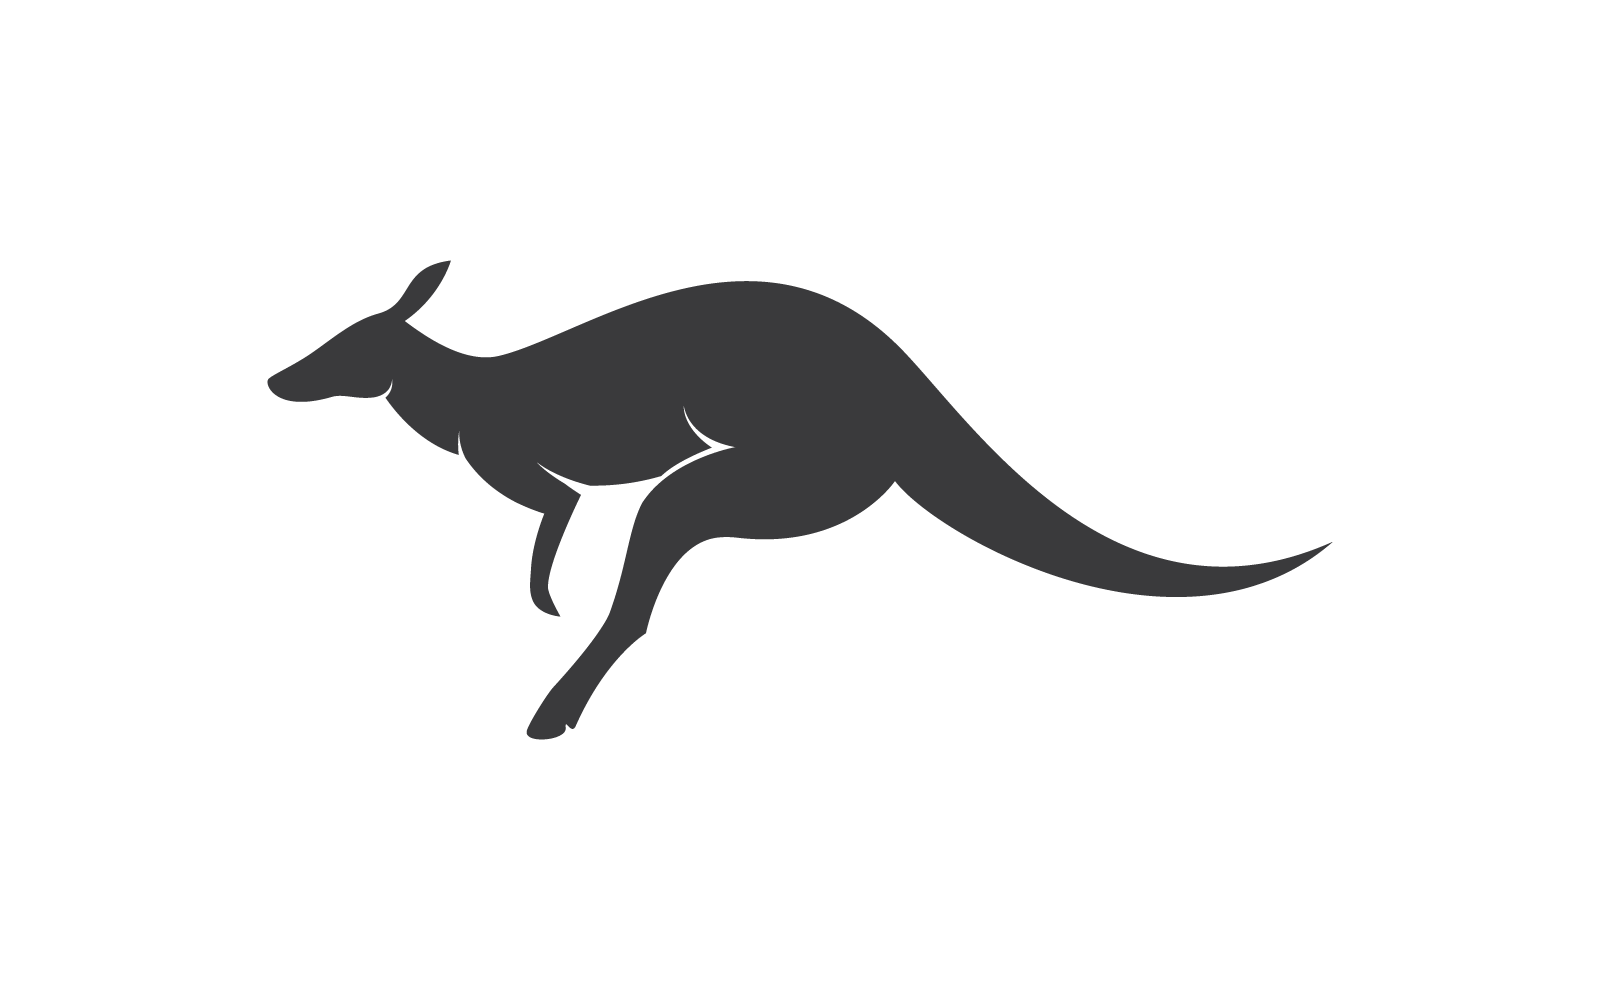 Kangur ilustracja logo wektor Płaska konstrukcja